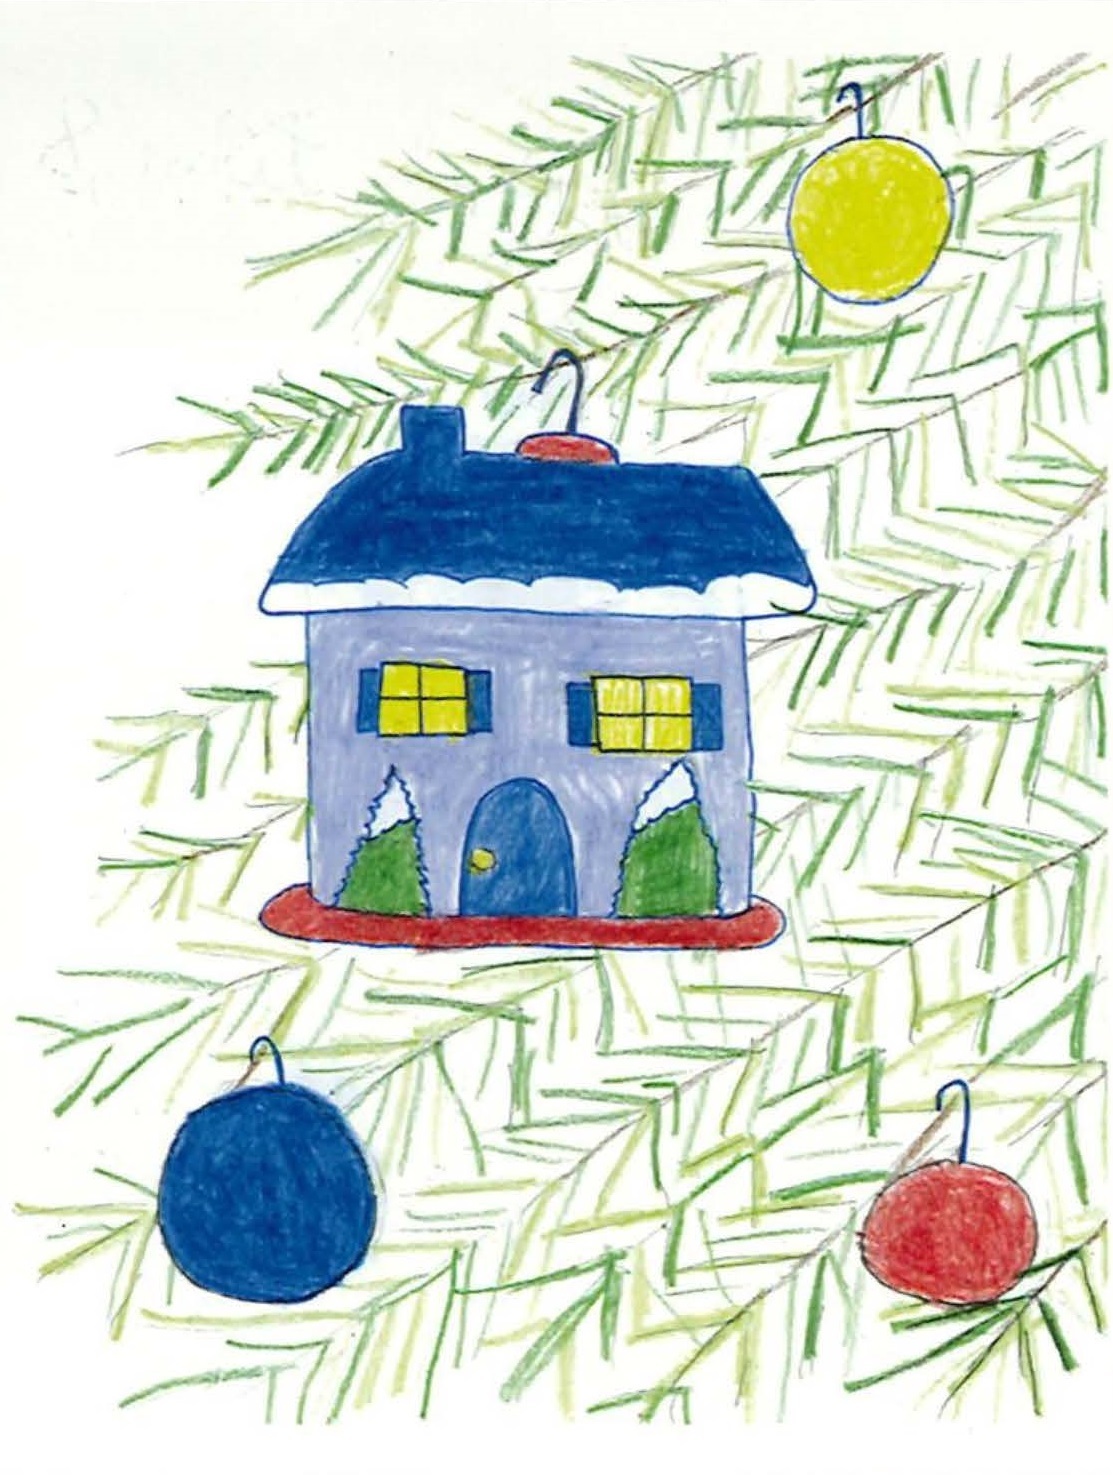 00-06: House Ornament